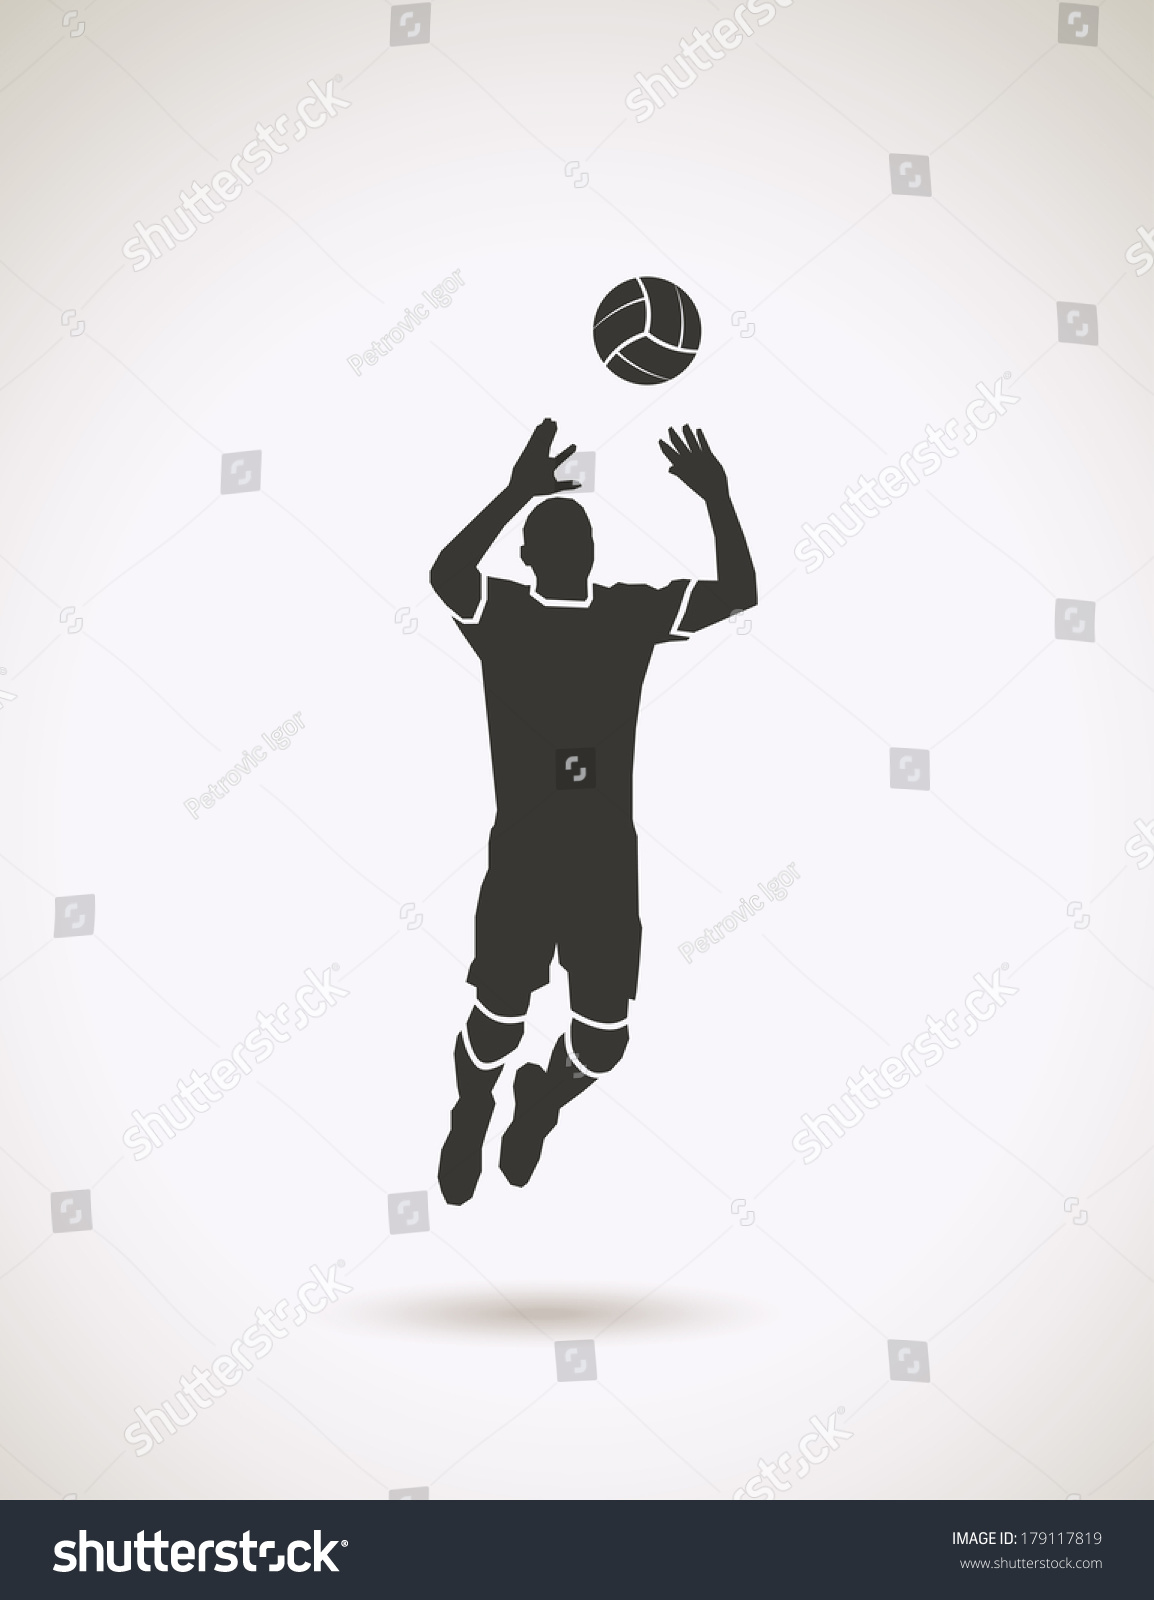 Volleyball Setter Vector Illustration Stock Vector 179117819 - Shutterstock